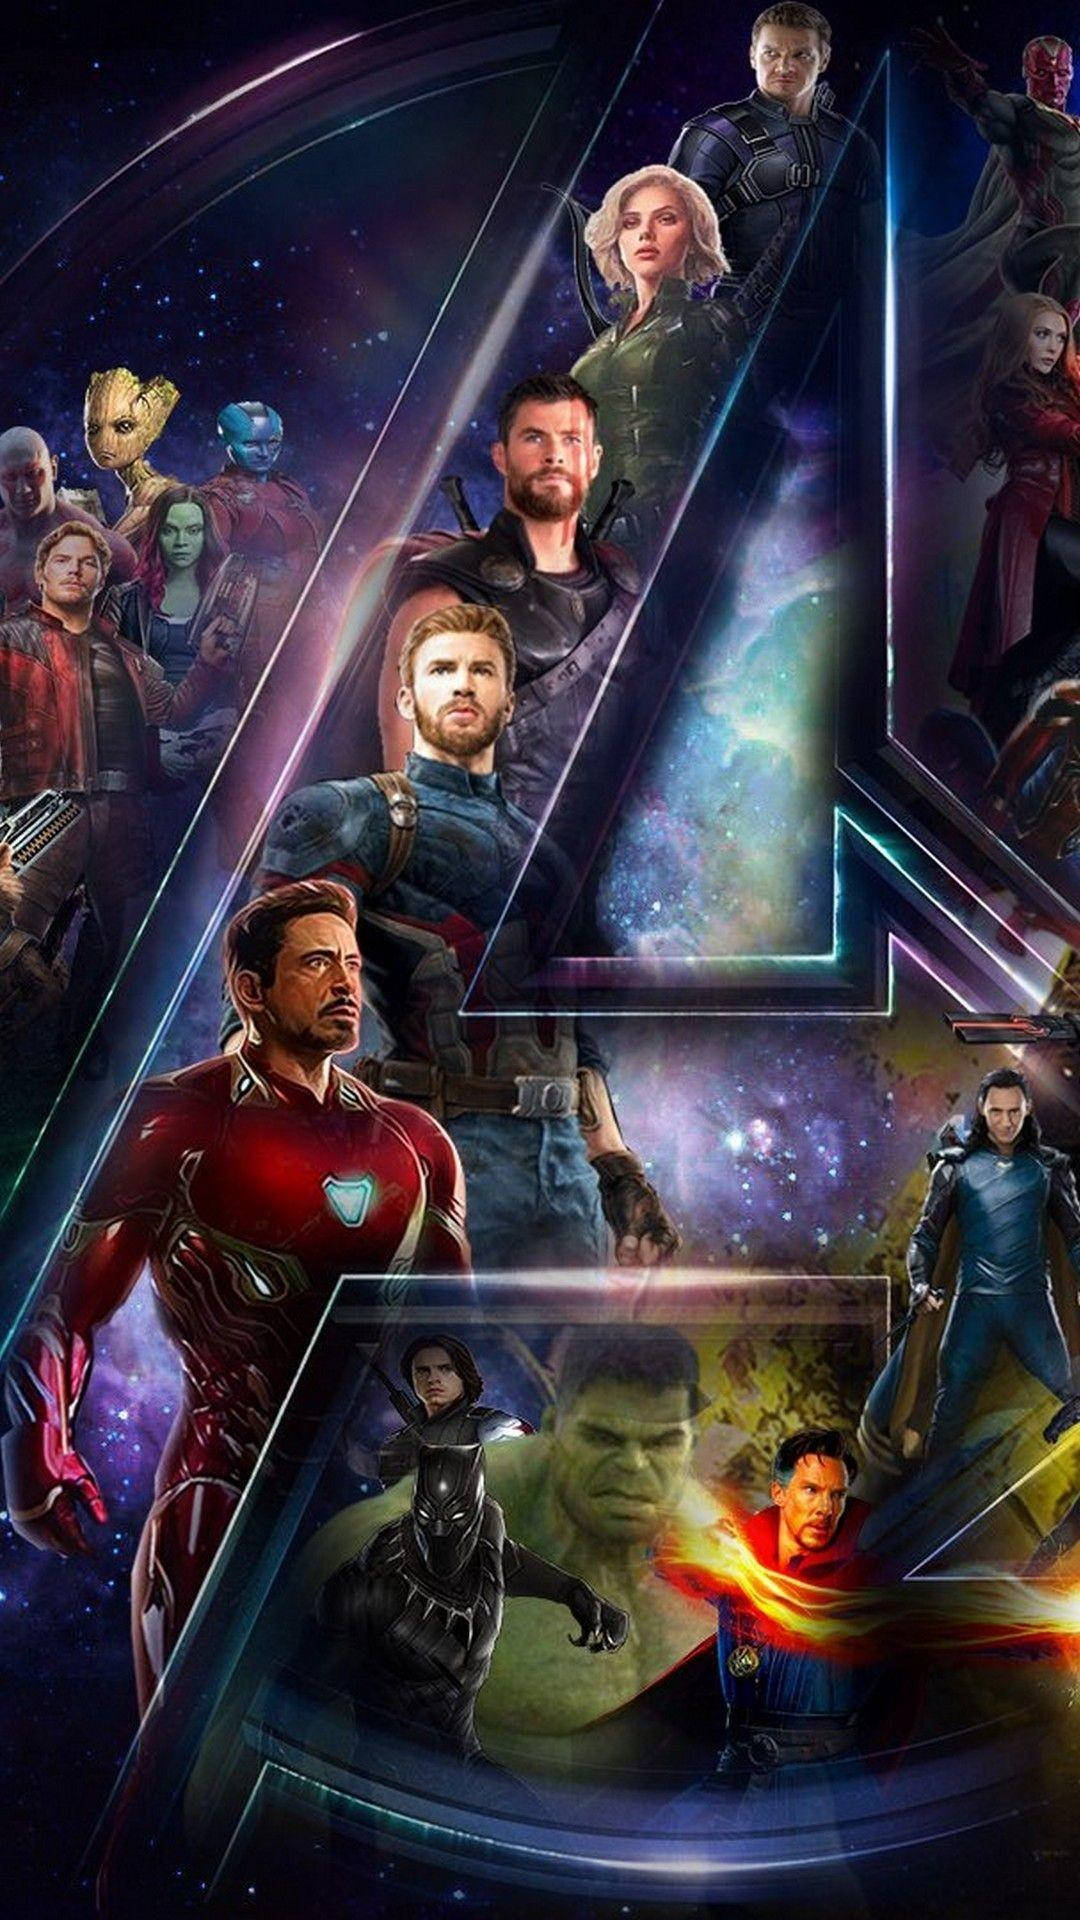 Free Avengers Iphone Wallpaper Downloads, [100+] Avengers Iphone Wallpapers  for FREE 